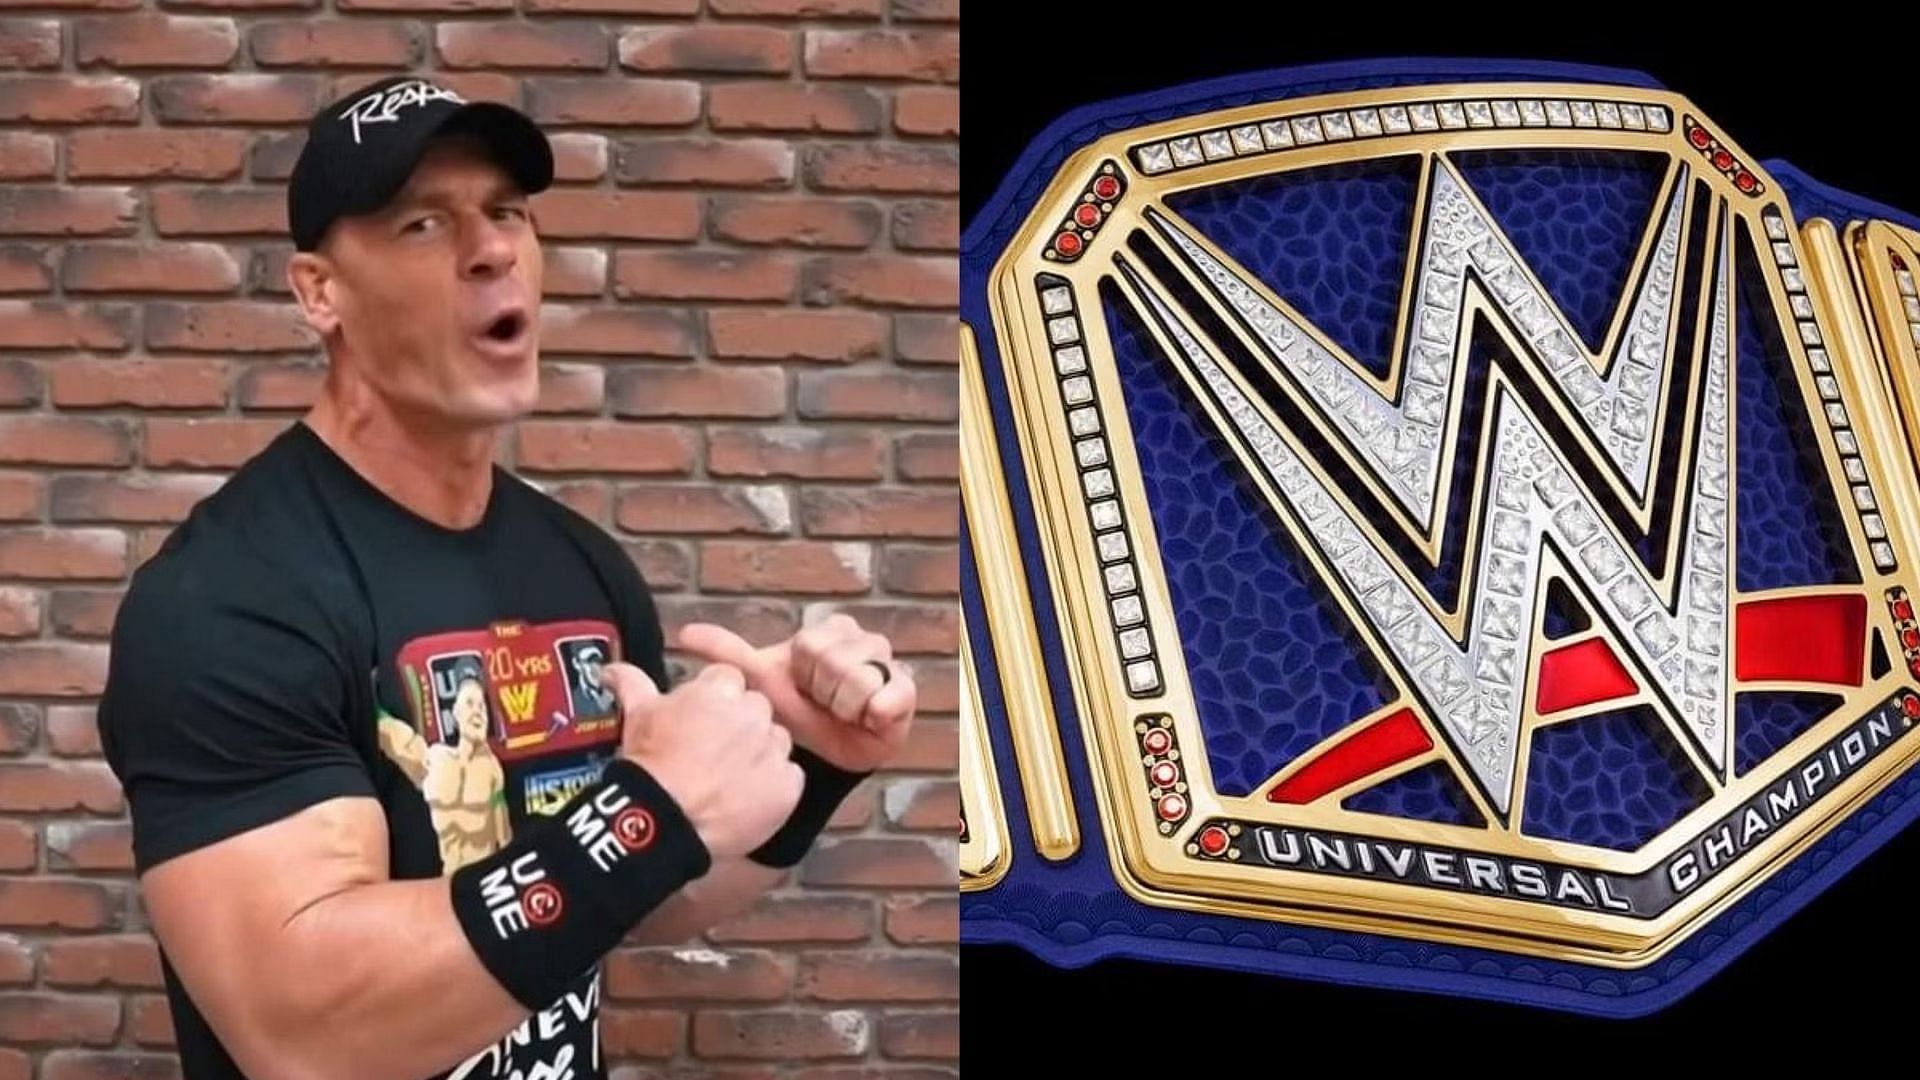 John Cena will make his in-ring return this Friday on SmackDown.